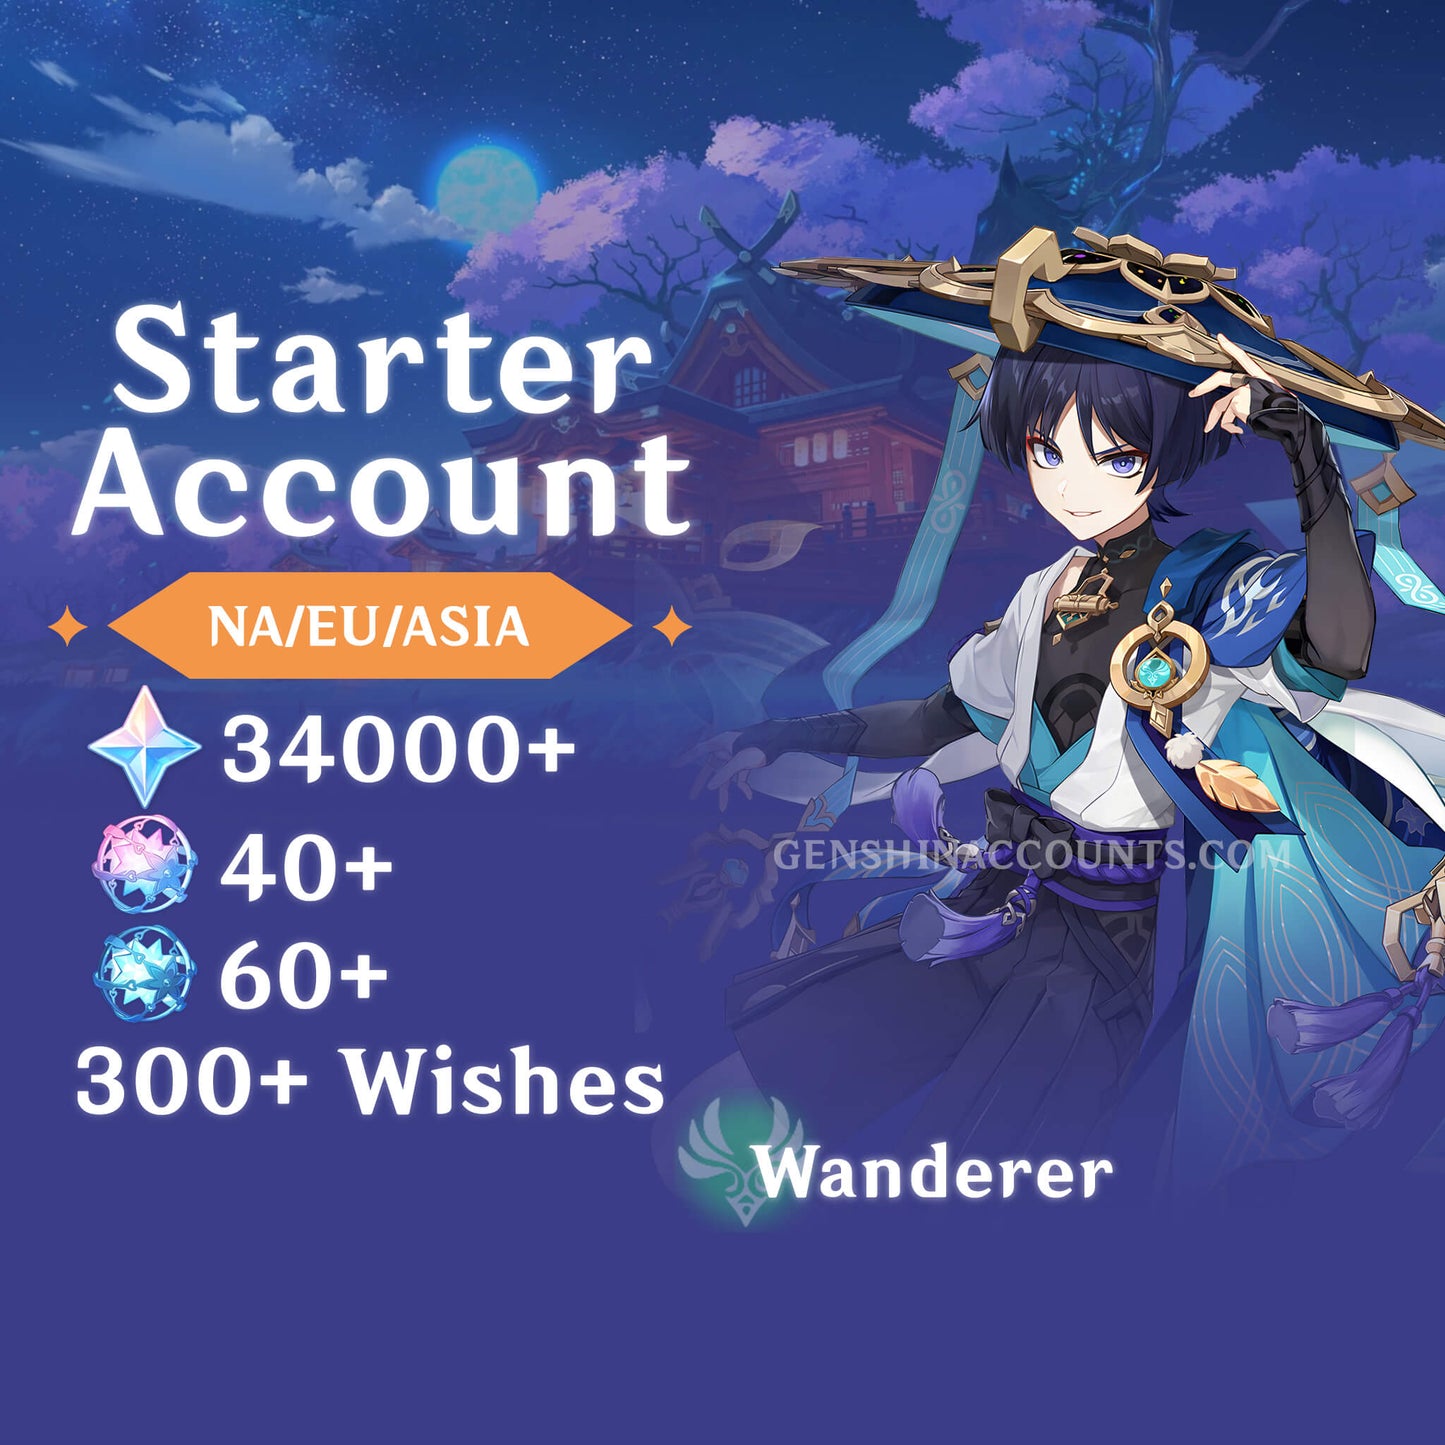 Wanderer AR40+ Genshin Impact Farmed Starter Account Genshin Accounts